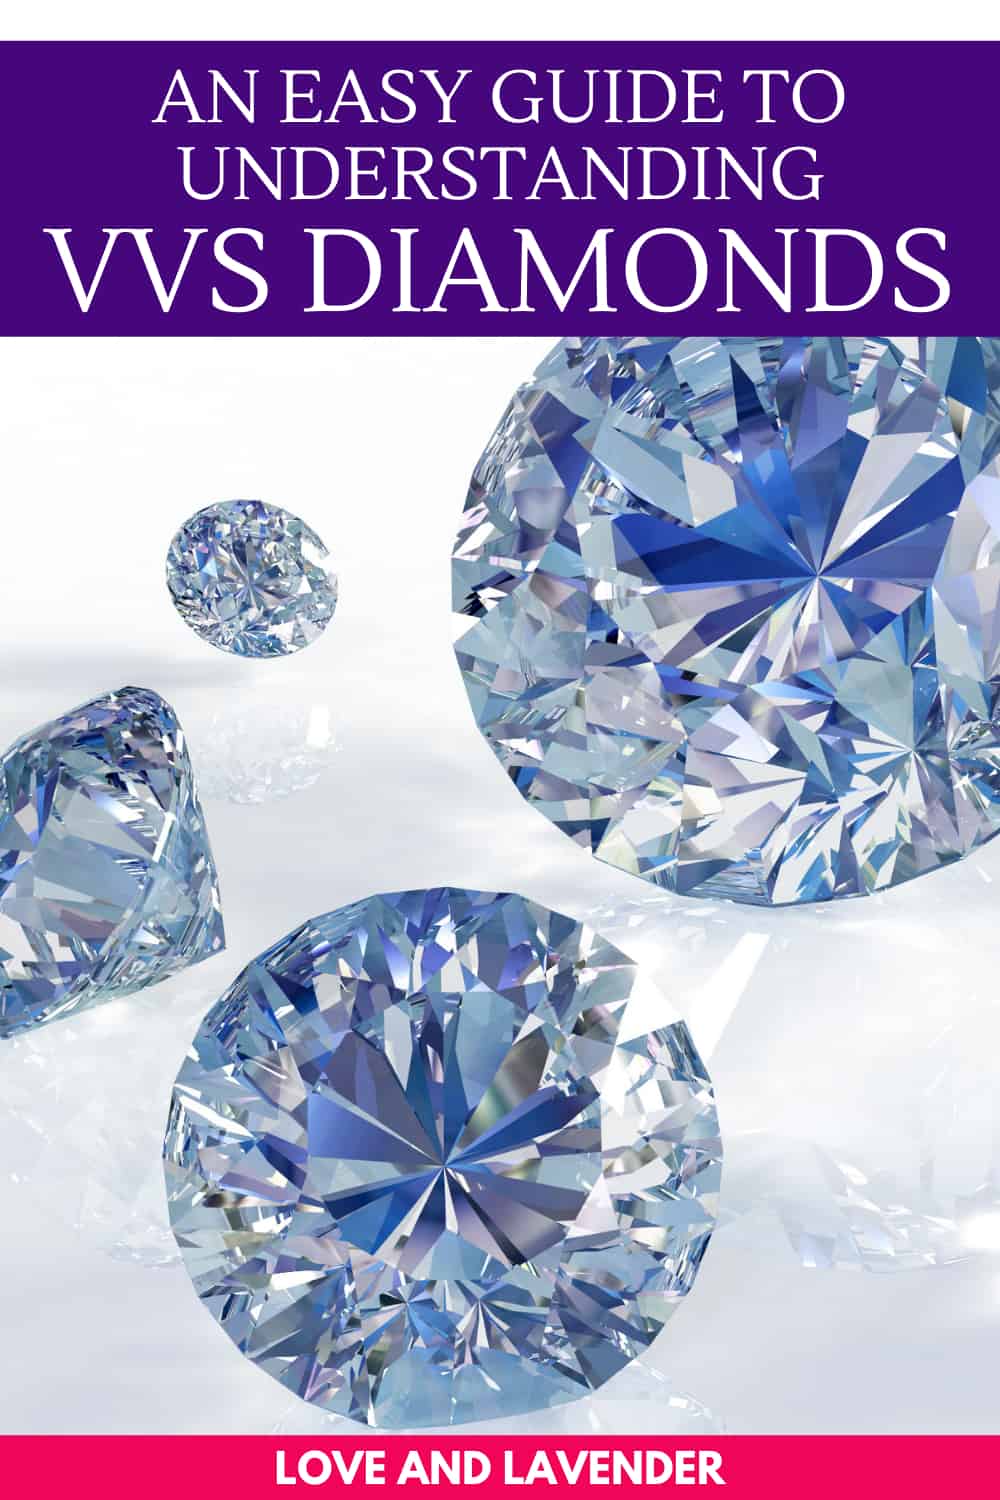 An Easy Guide to Understanding VVS Diamonds - Pinterest pin